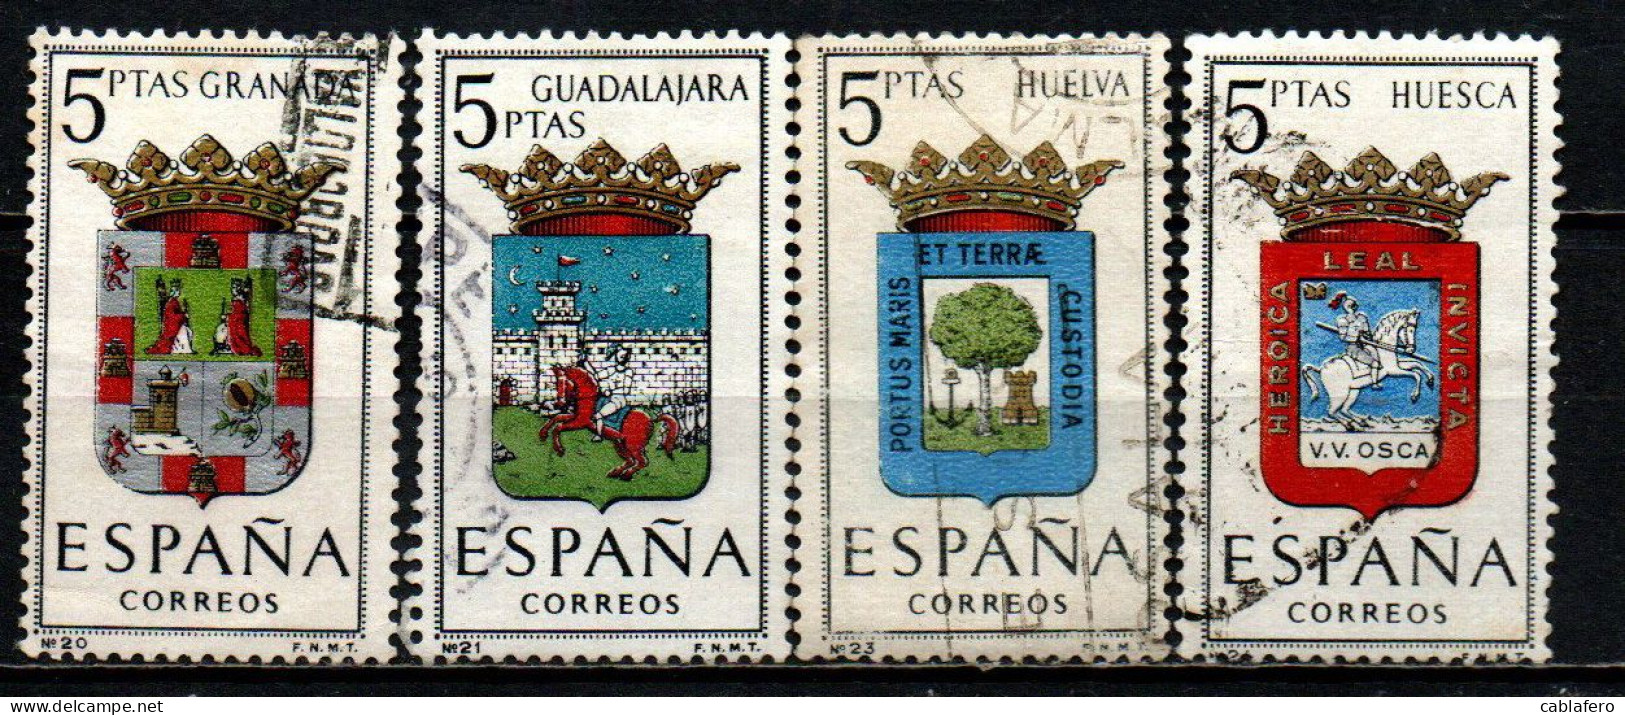 SPAGNA - 1963 - STEMMI DELLE PROVINCE SPAGNOLE: GRANADA, GUADALAJARA, HUELVA, HUESCA - USATI - Usados